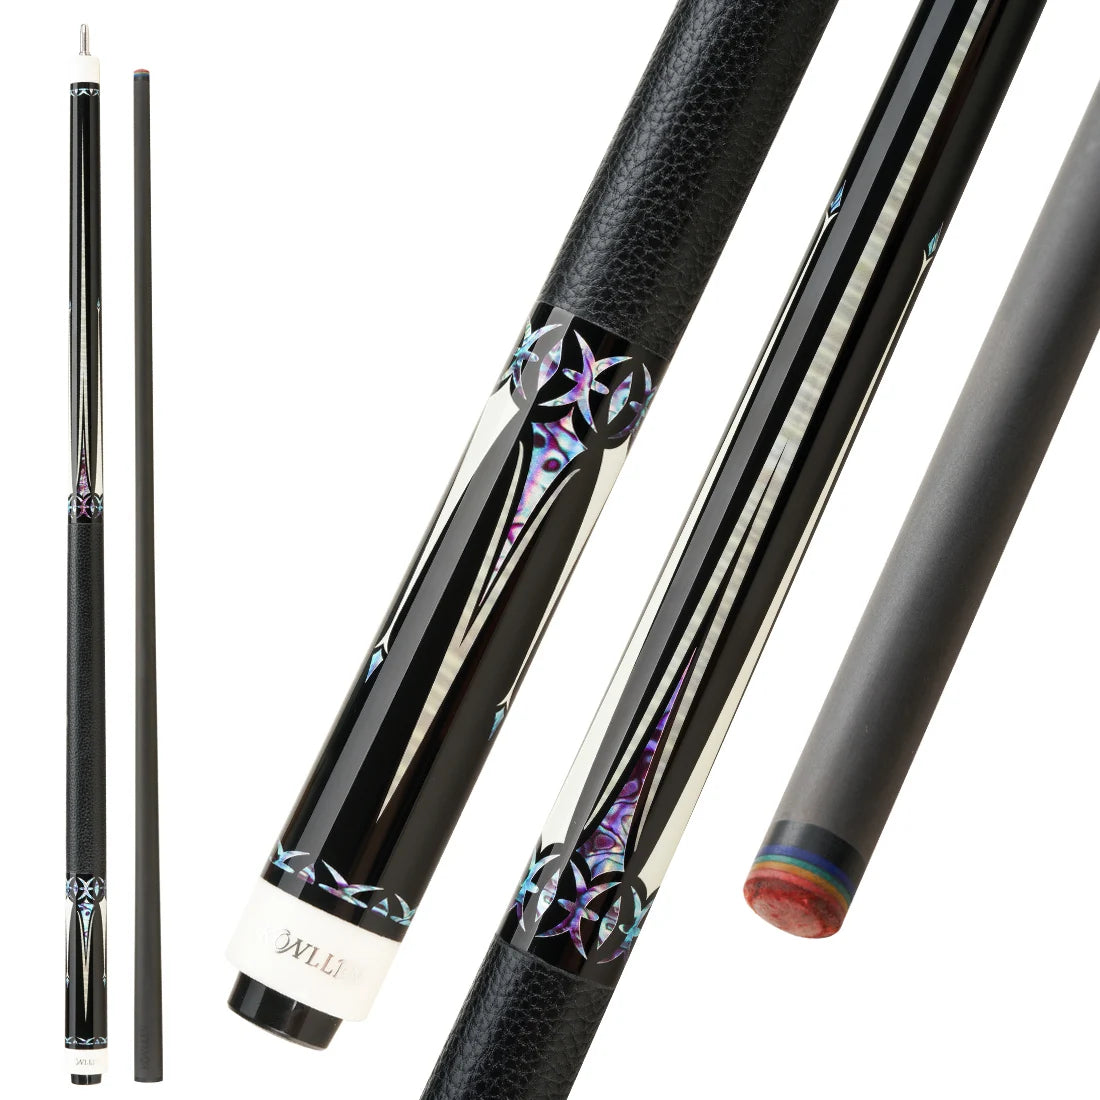 KONLLEN Billiard KL-3K Carbon Fiber Pool Cue Stick 12.2mm Tip 3*8/8 Uniloc Joint Pin Professional Low Deflection Stick Kit